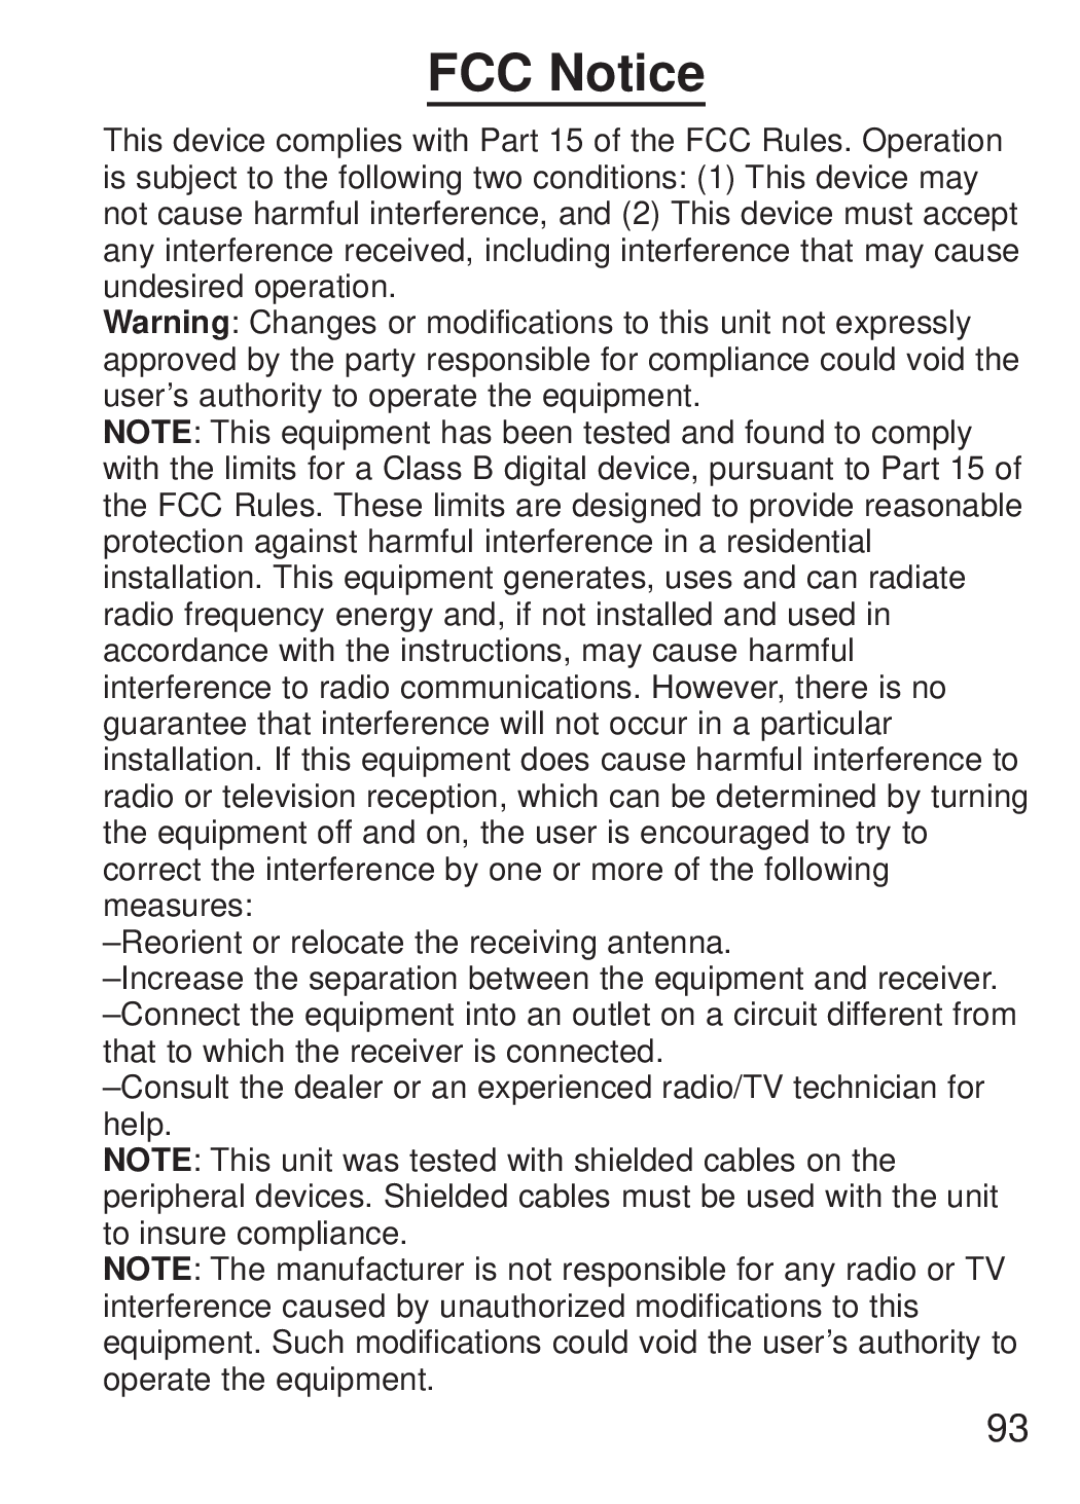 Franklin FQS-1870 manual FCC Notice 